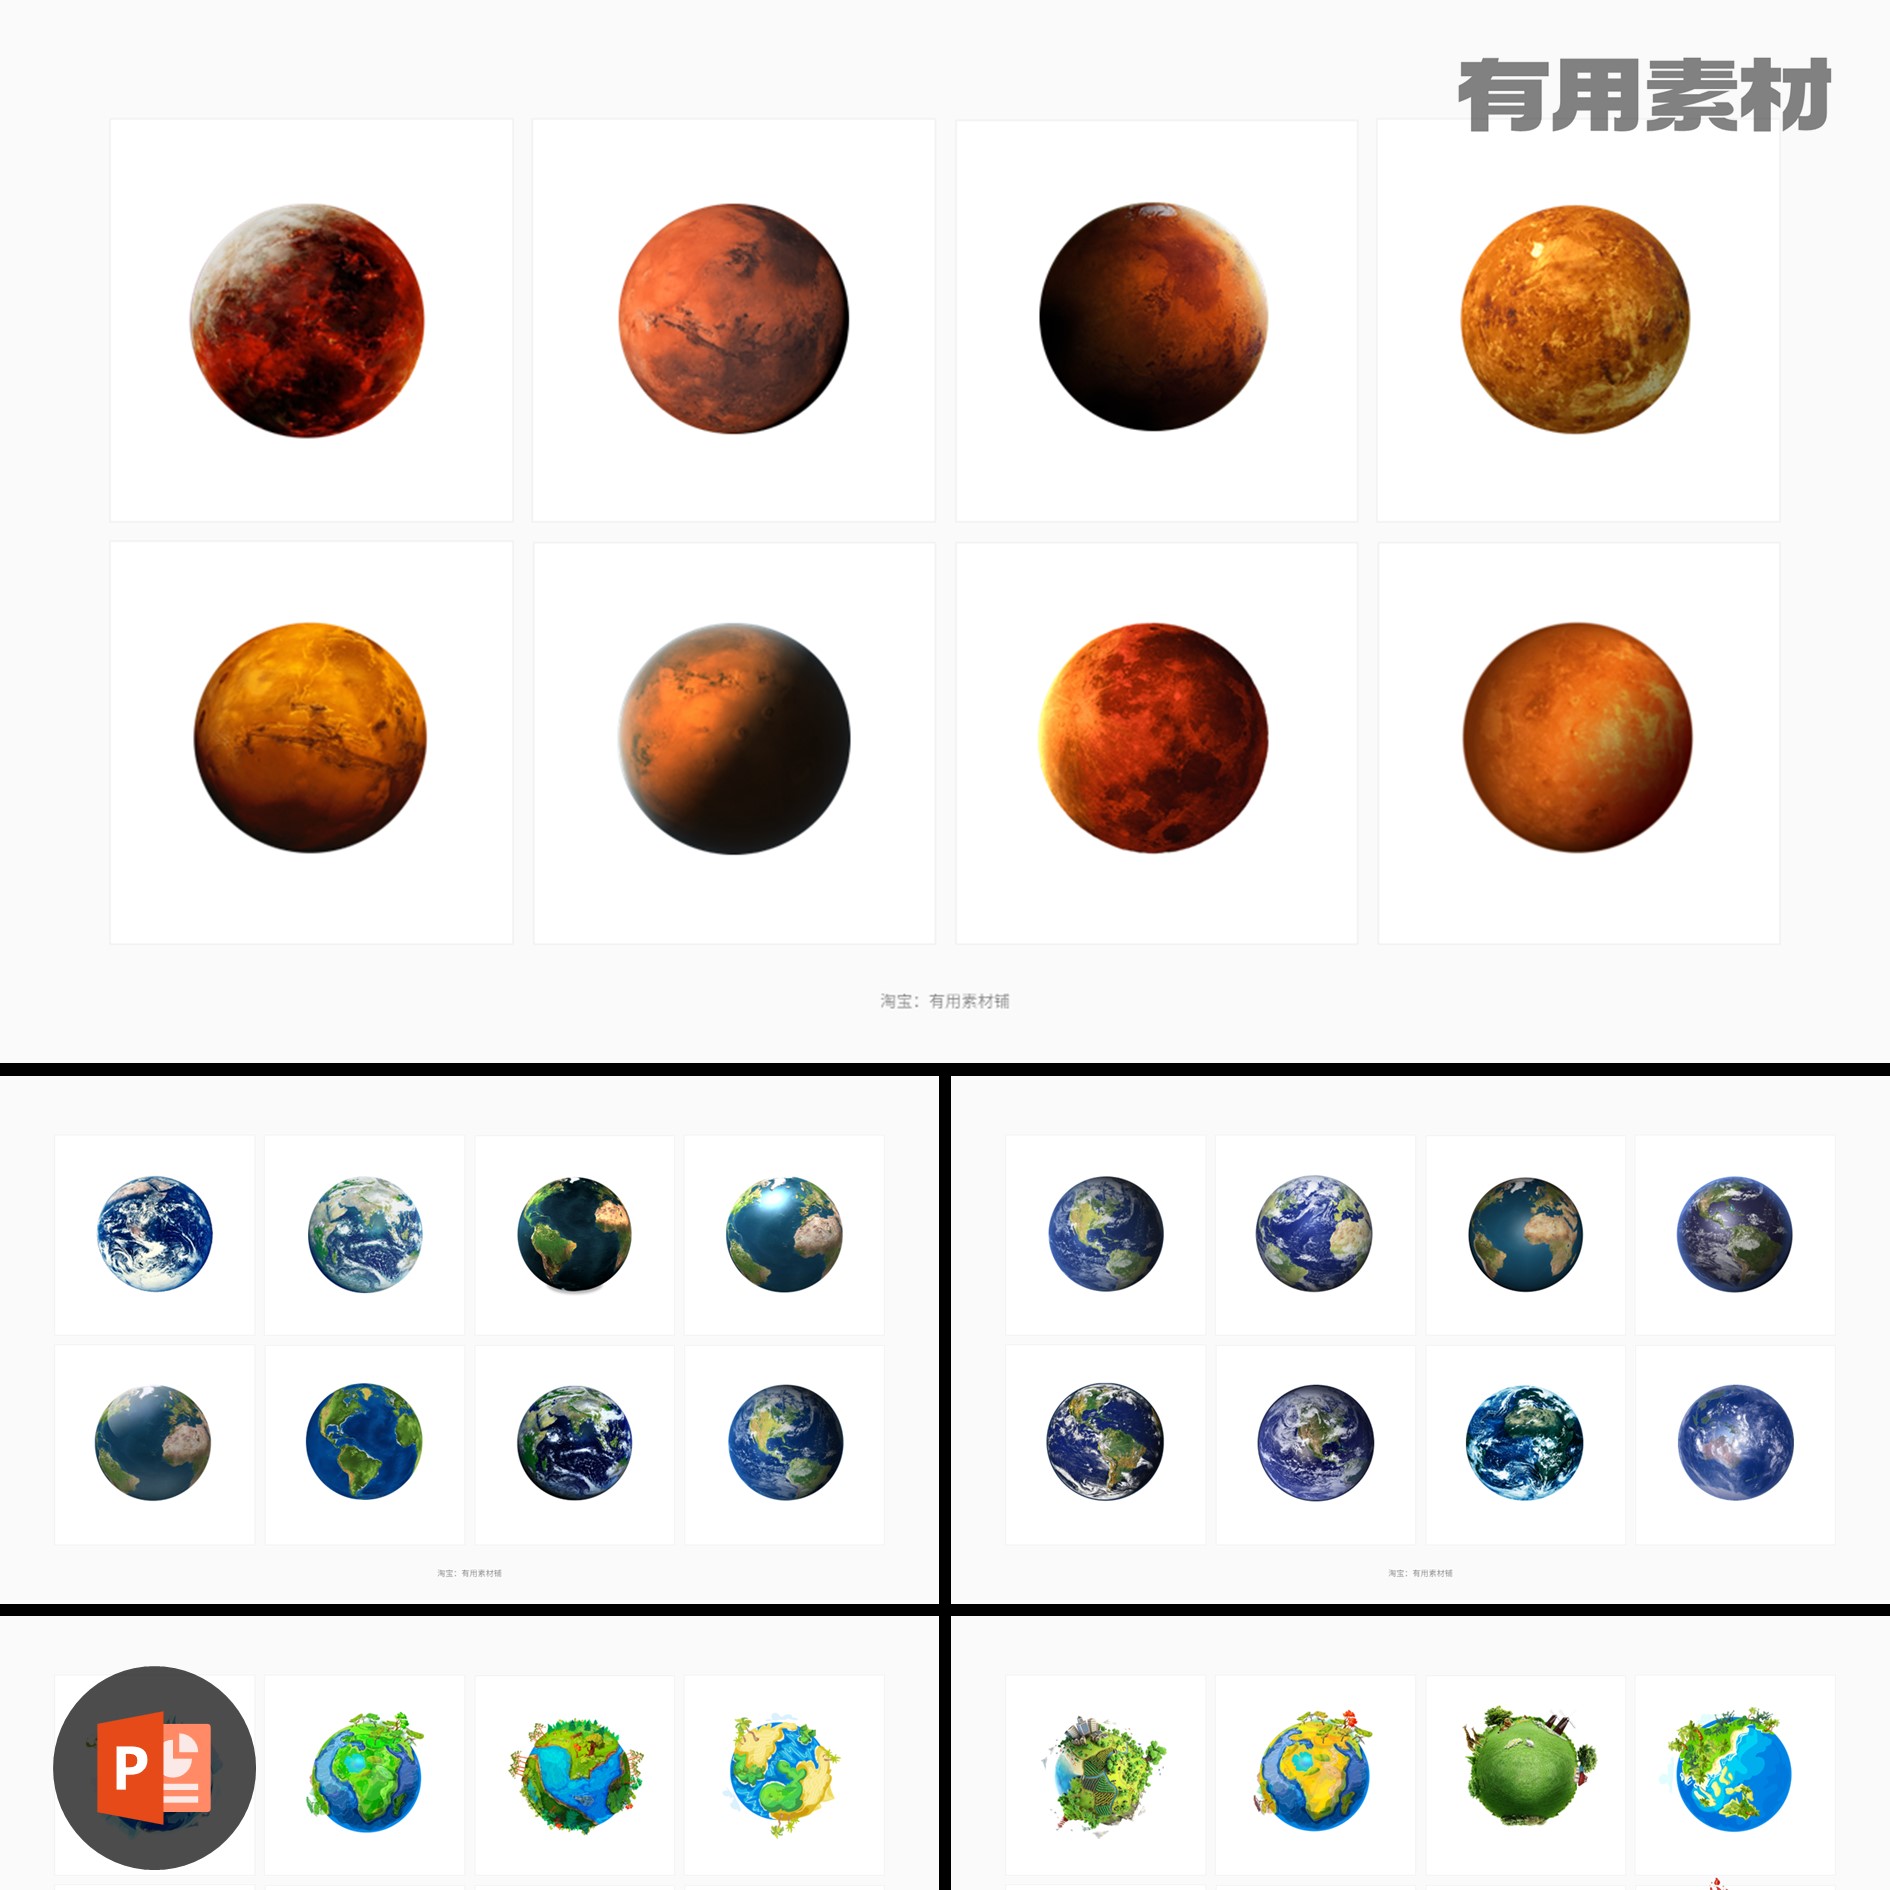 【PPT-239】168例星球素材写实卡通地球太阳系八大行星PPT素材